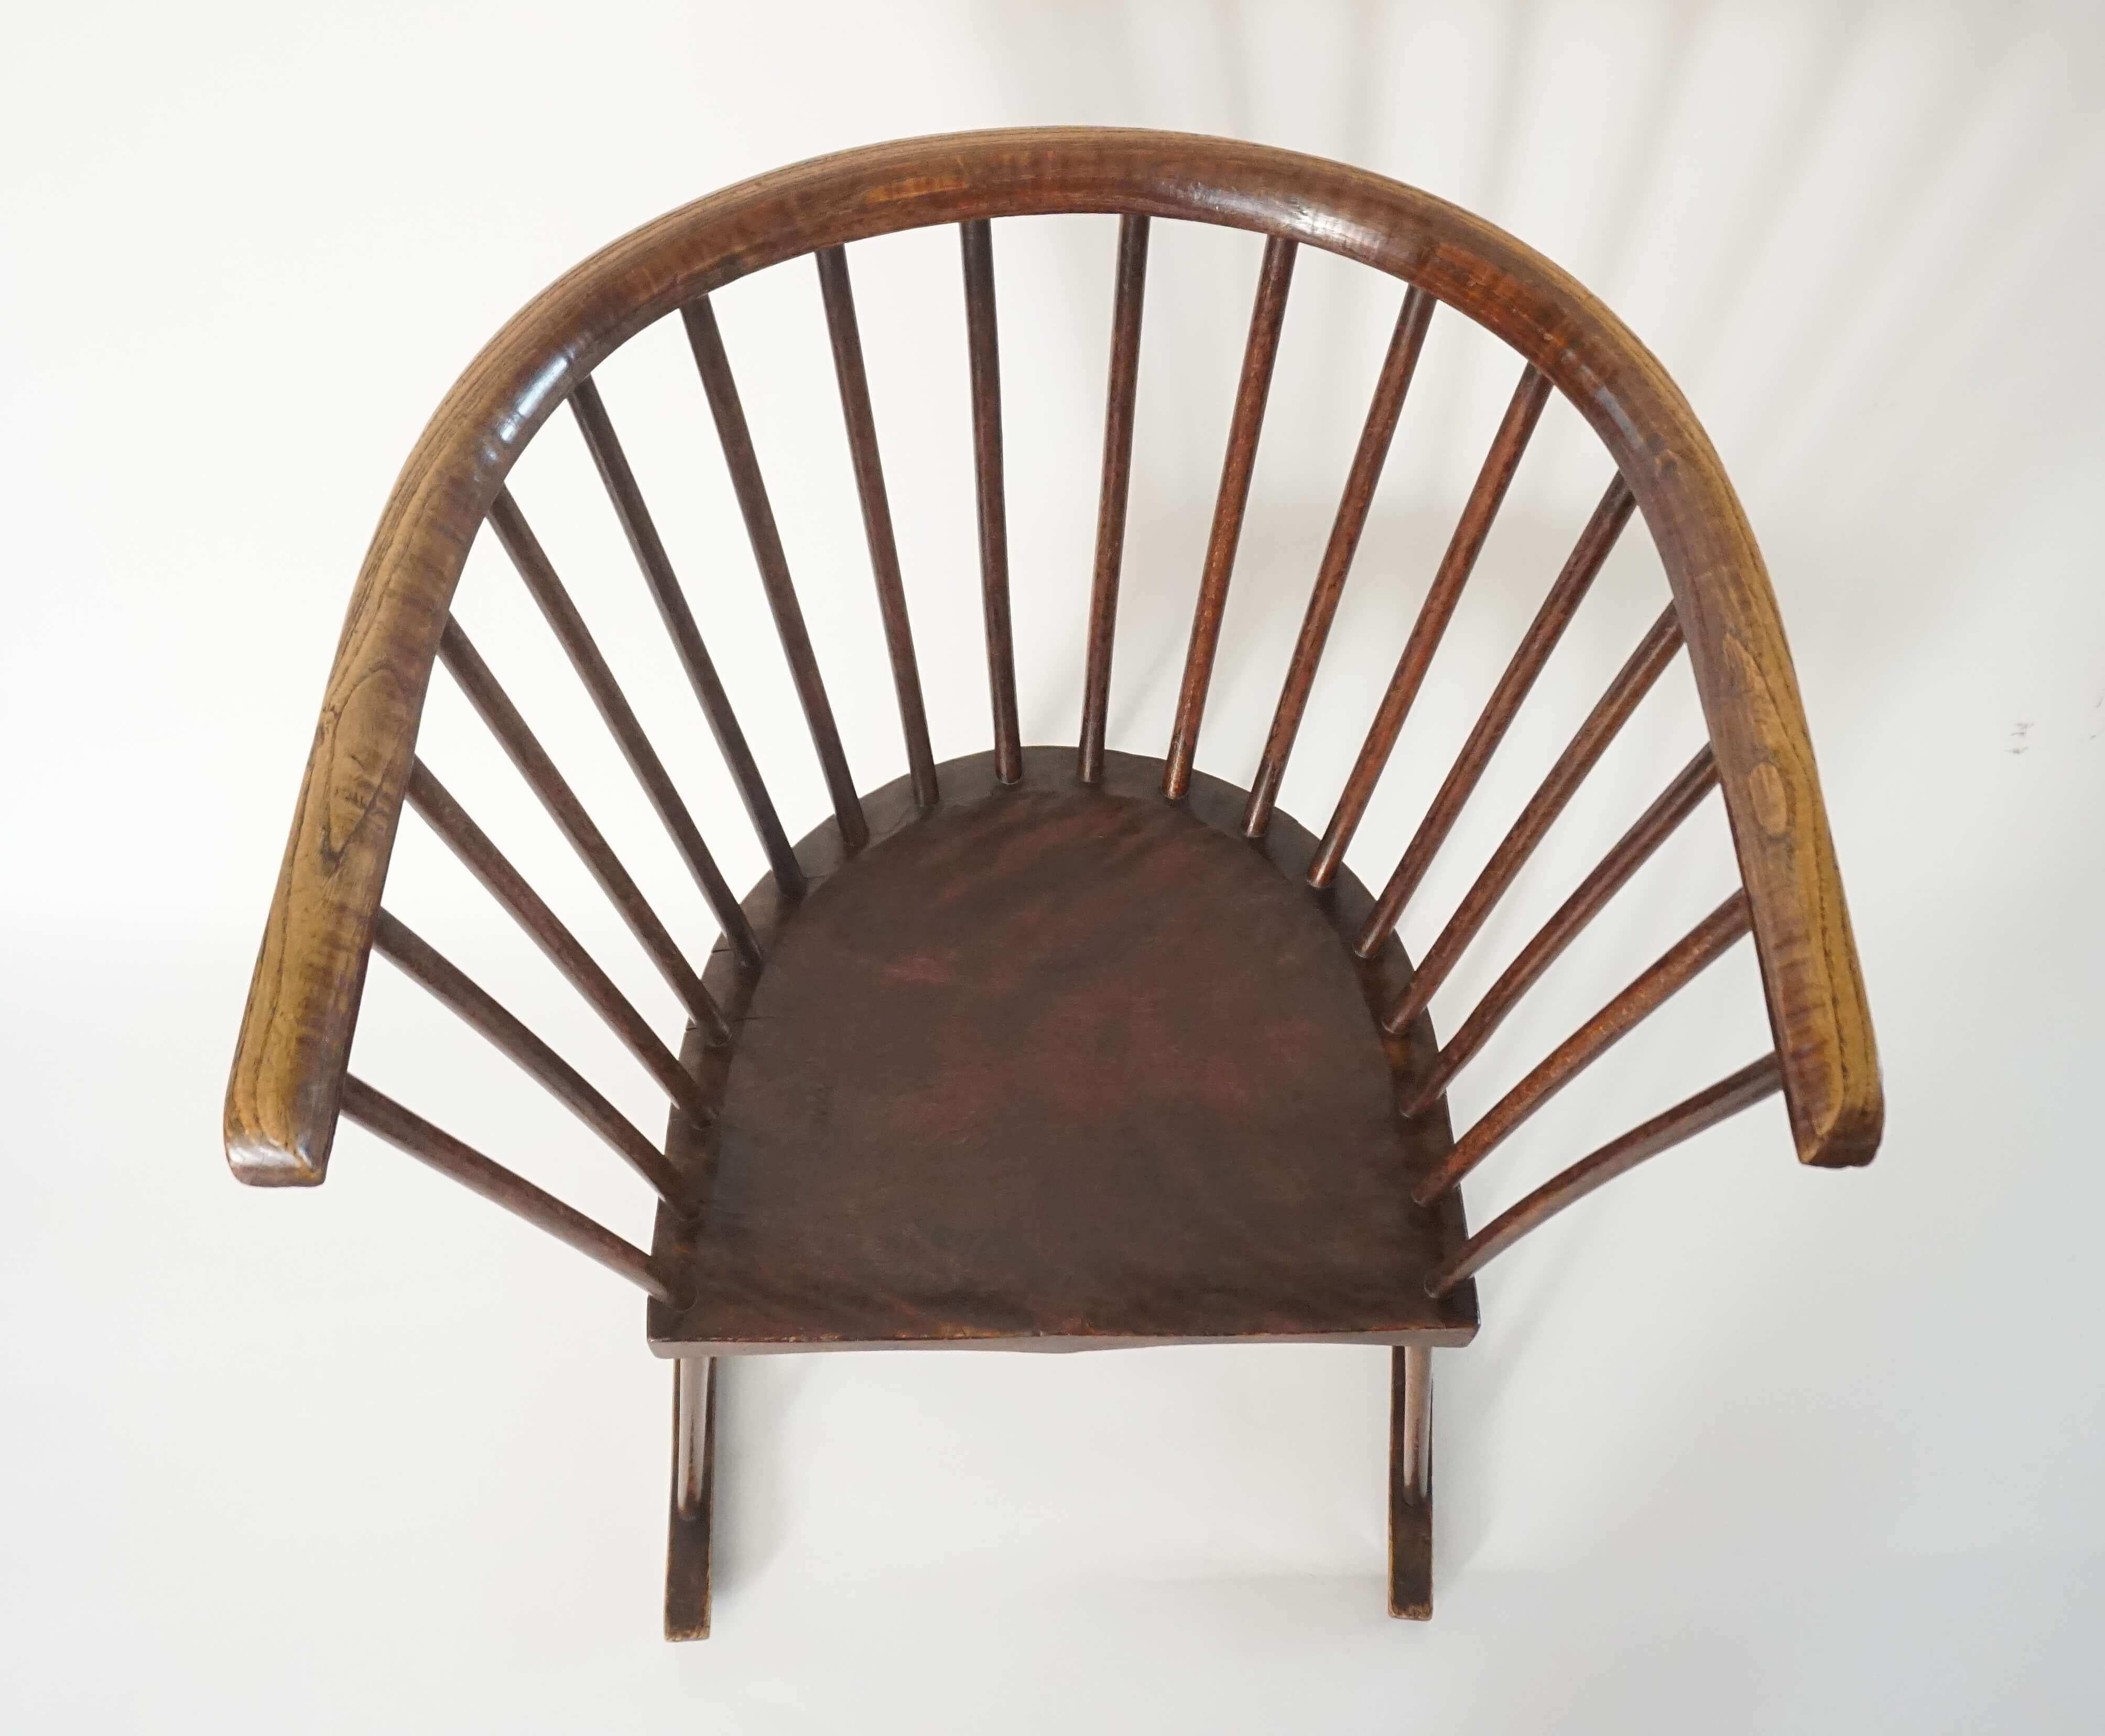 Early 20th Century English Arts & Crafts Chair by Hugo Erskine Wemyss, circa 1905